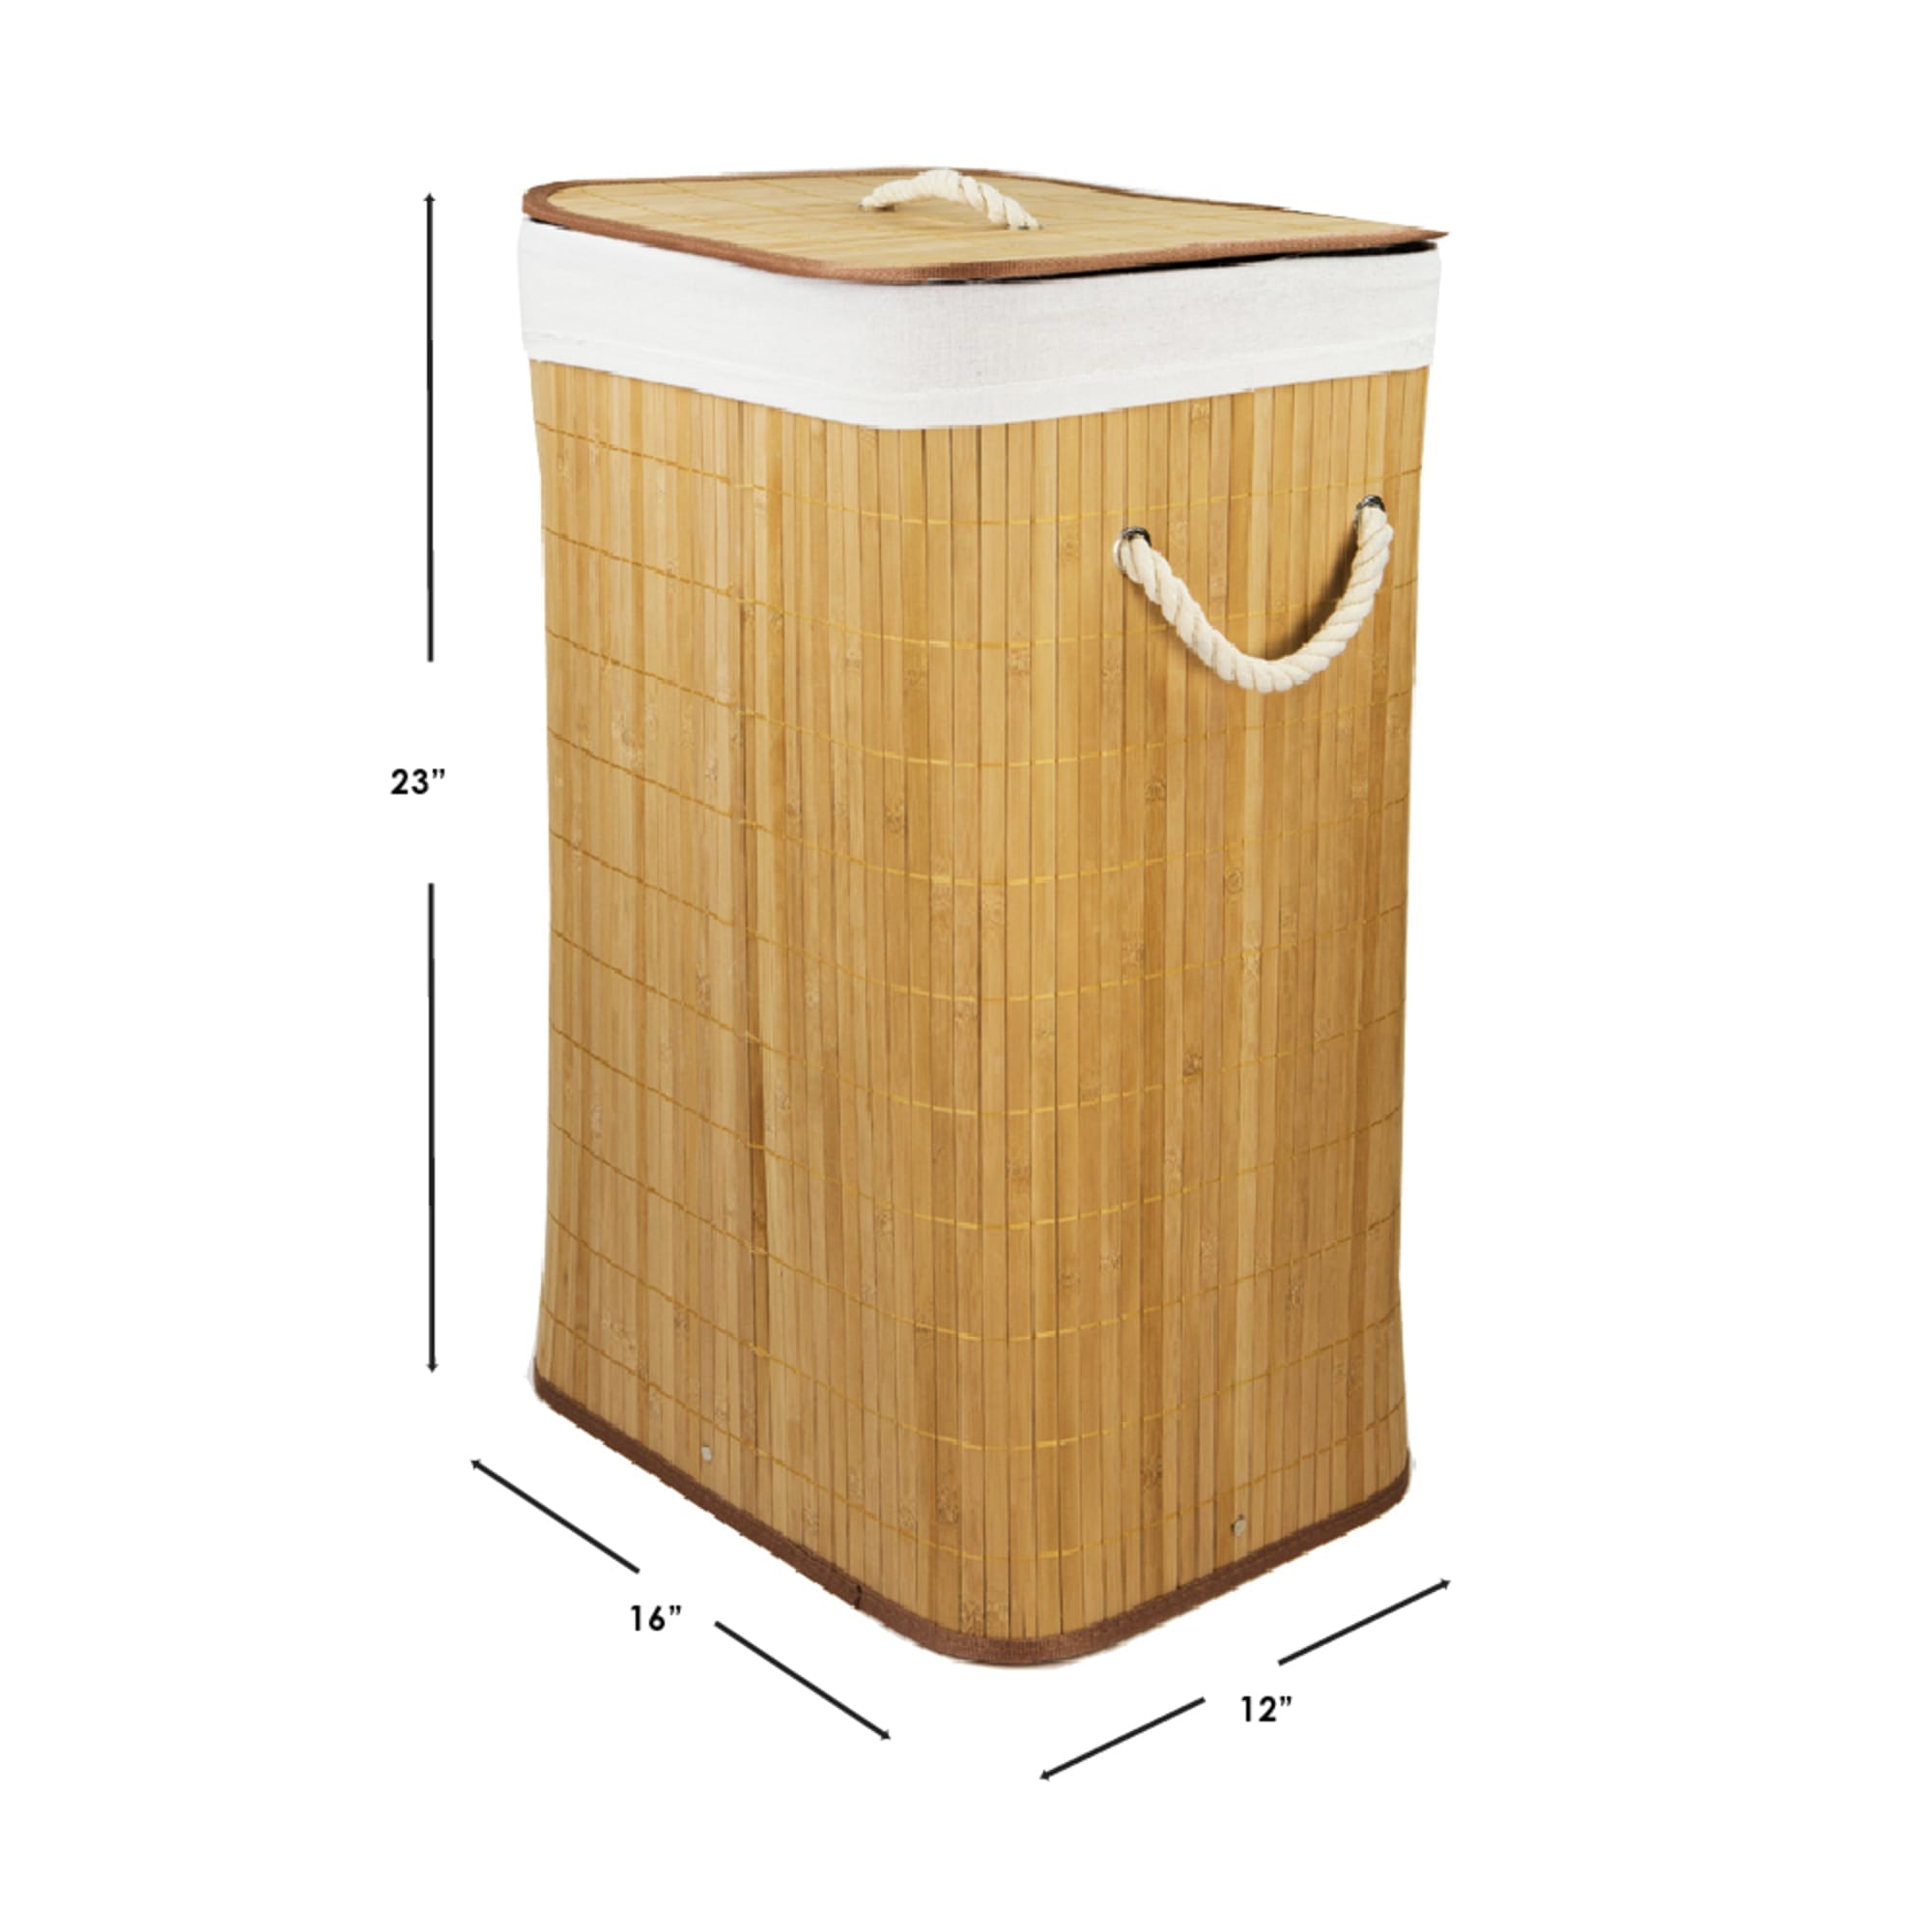 Home Basics Rectangular Bamboo Hamper, Natural $15.00 EACH, CASE PACK OF 6